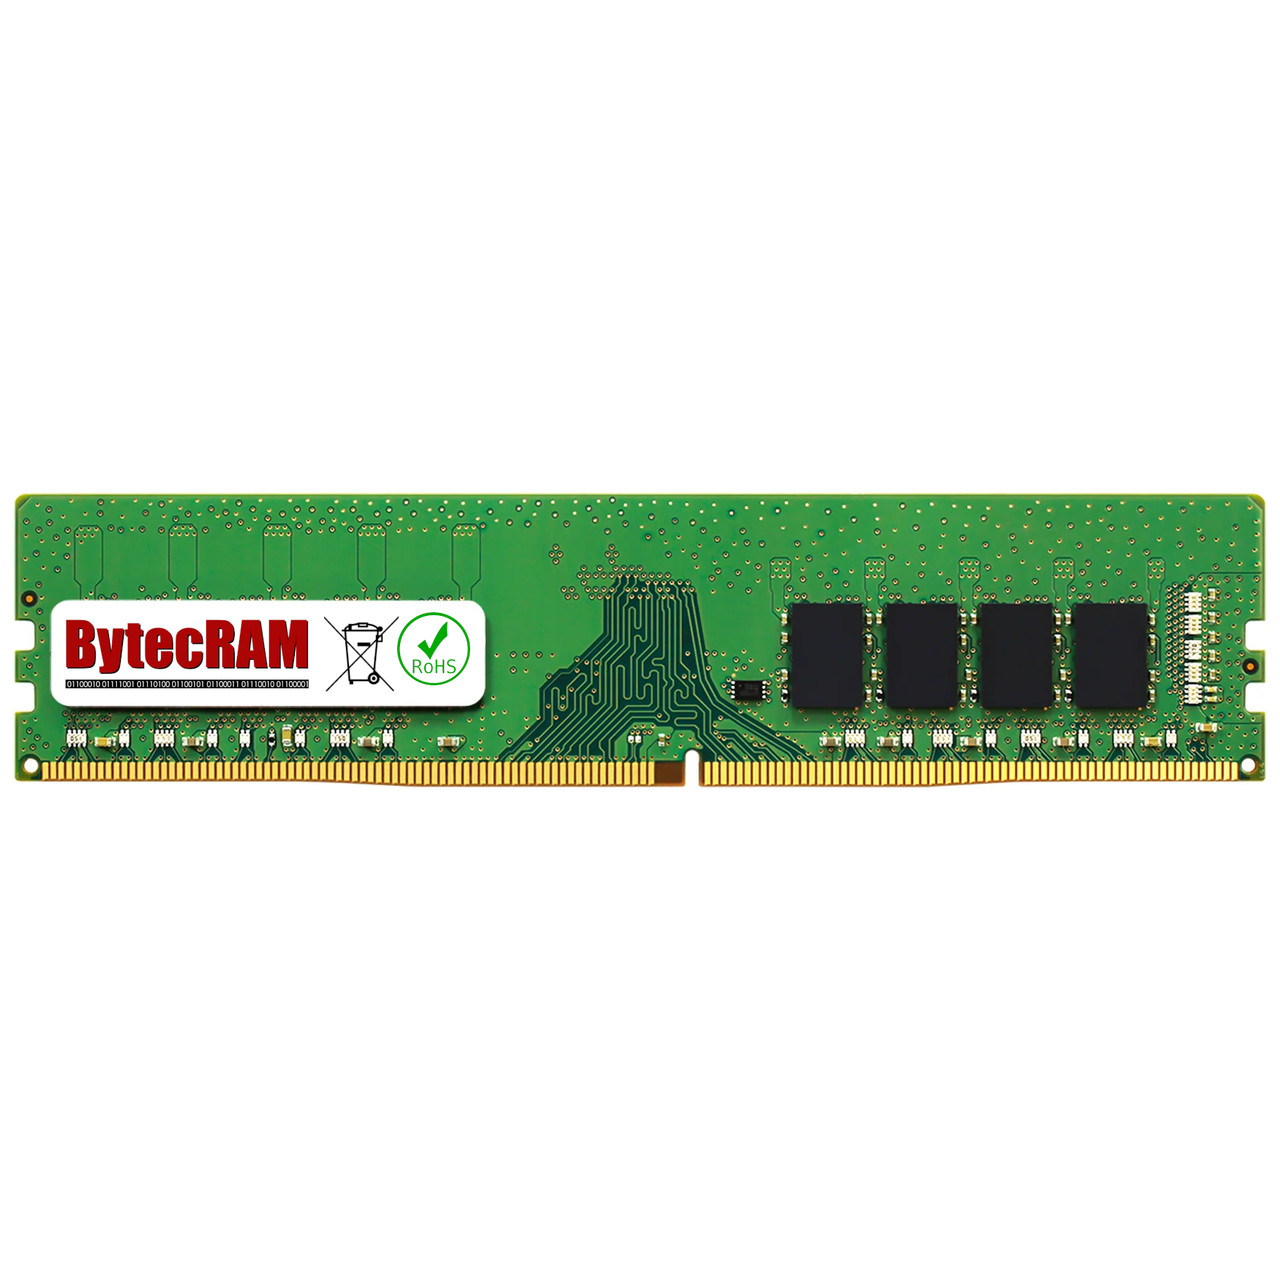 eBay*16GB Acer Predator PO3-600-UR1D DDR4 2666MHz UDIMM Memory RAM Upgrade